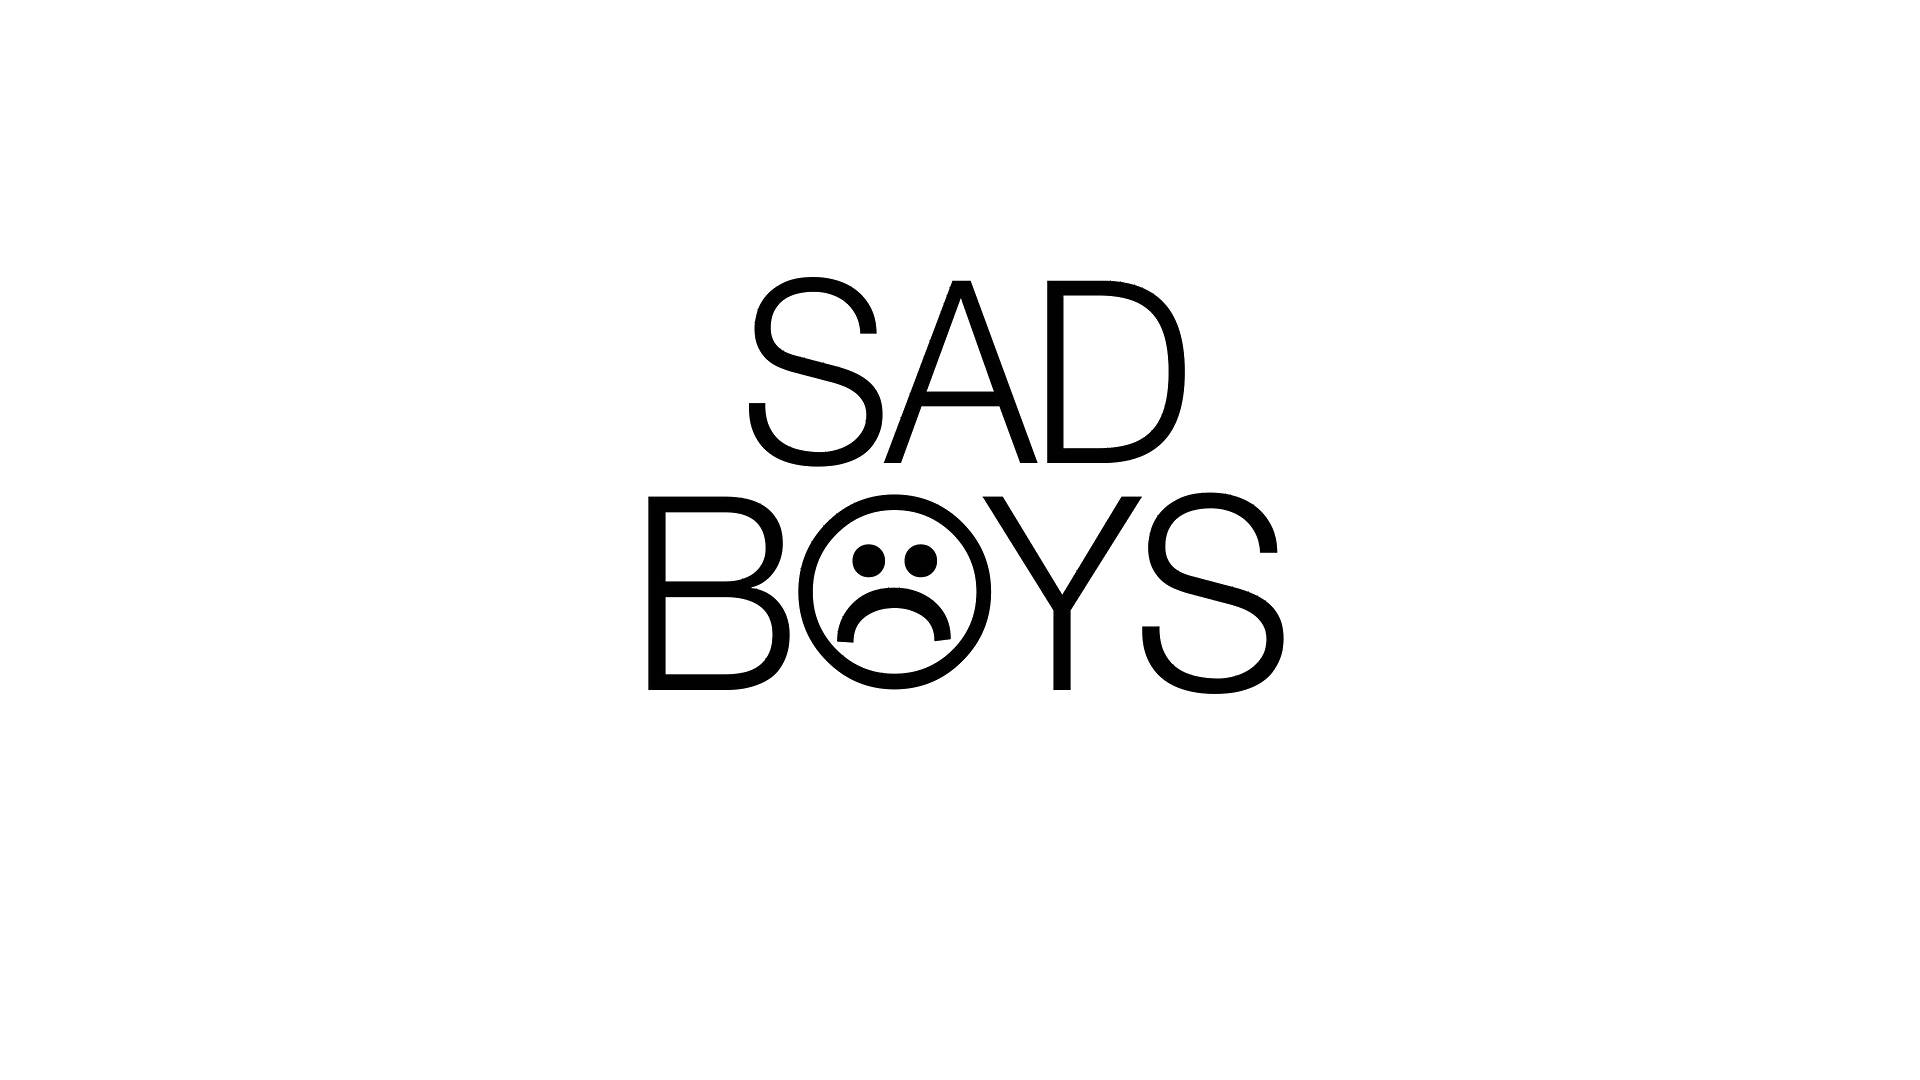 Sad Boys Typography With Icon Background